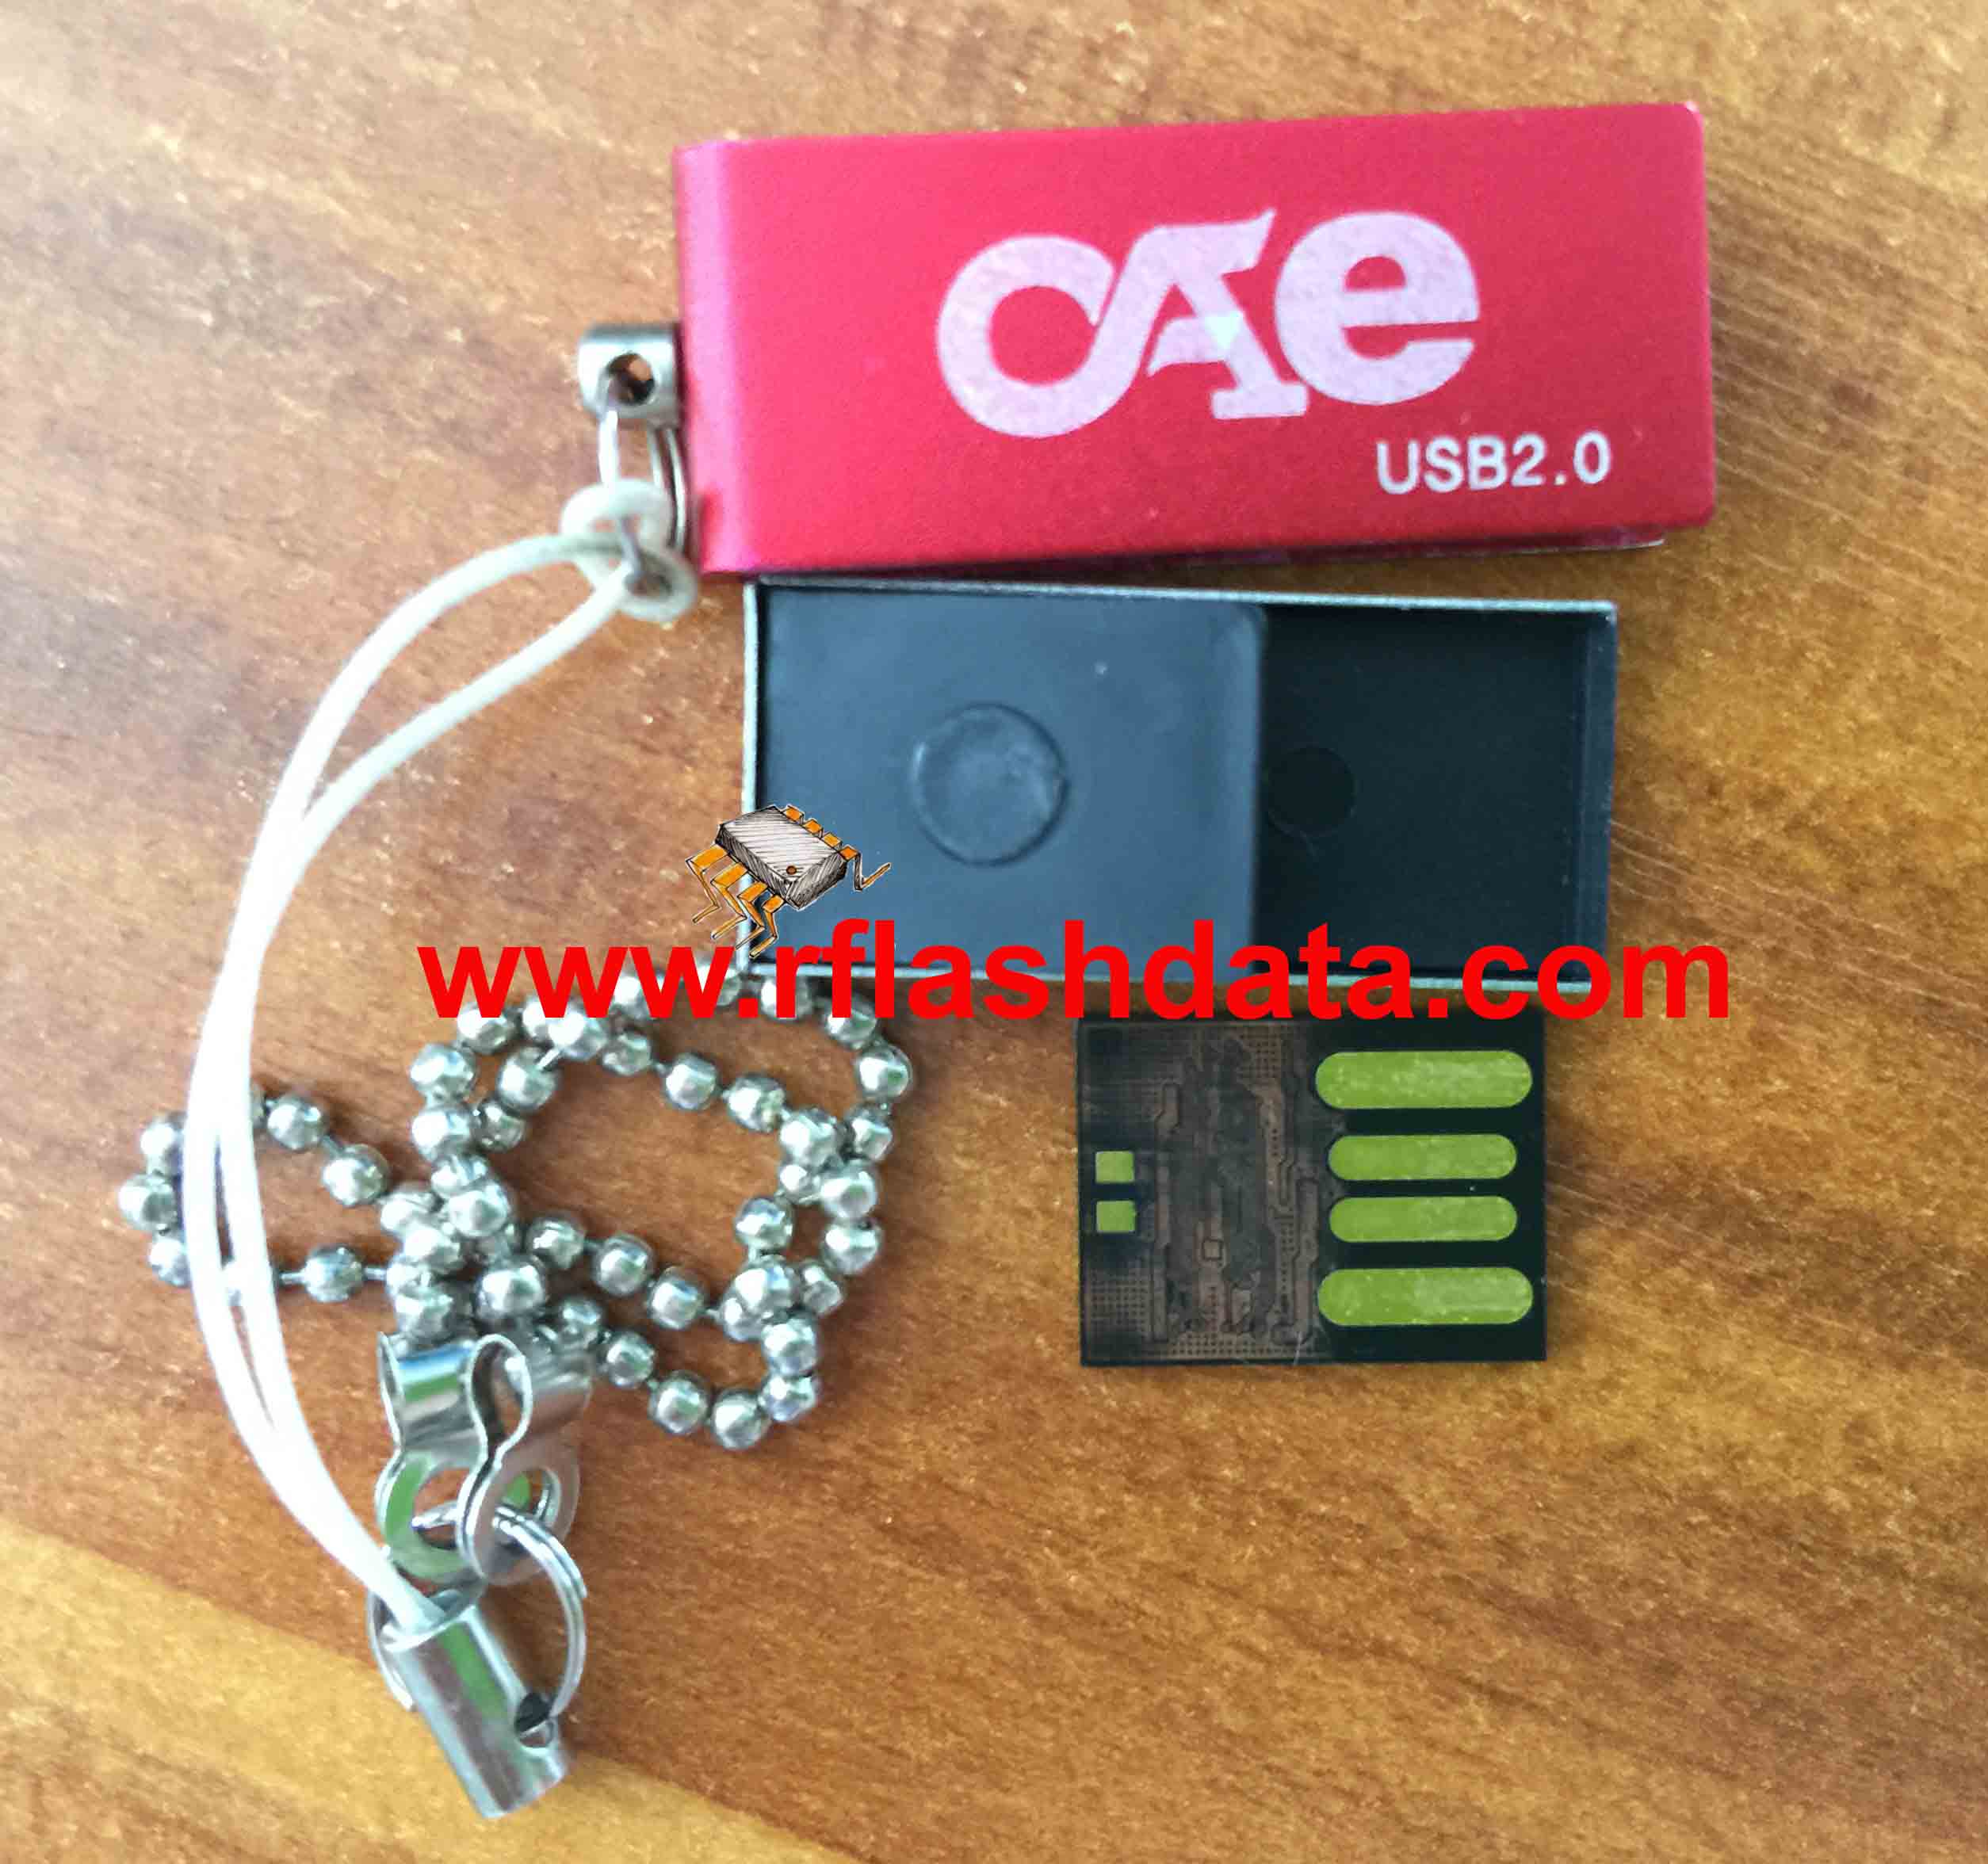 OAE USB flash drive